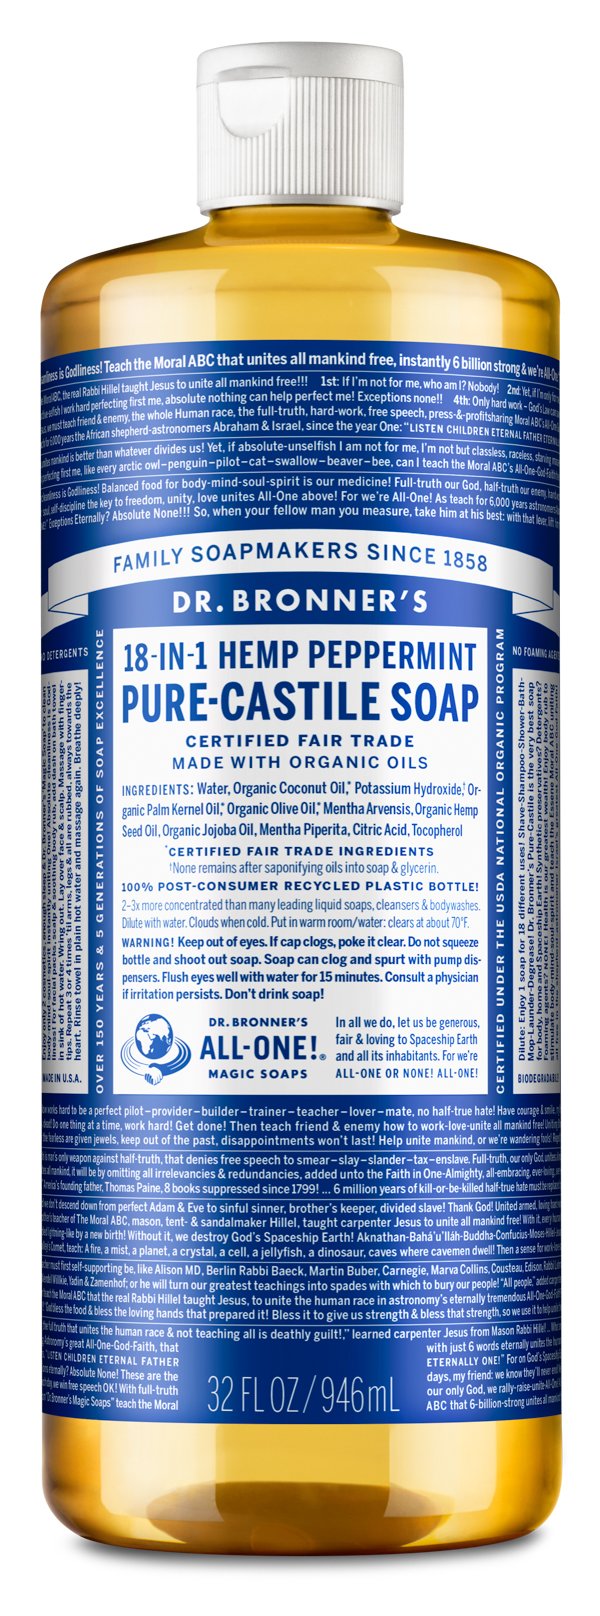 PEPPERMINT PURE-CASTILE LIQUID SOAP by Dr. Bronner